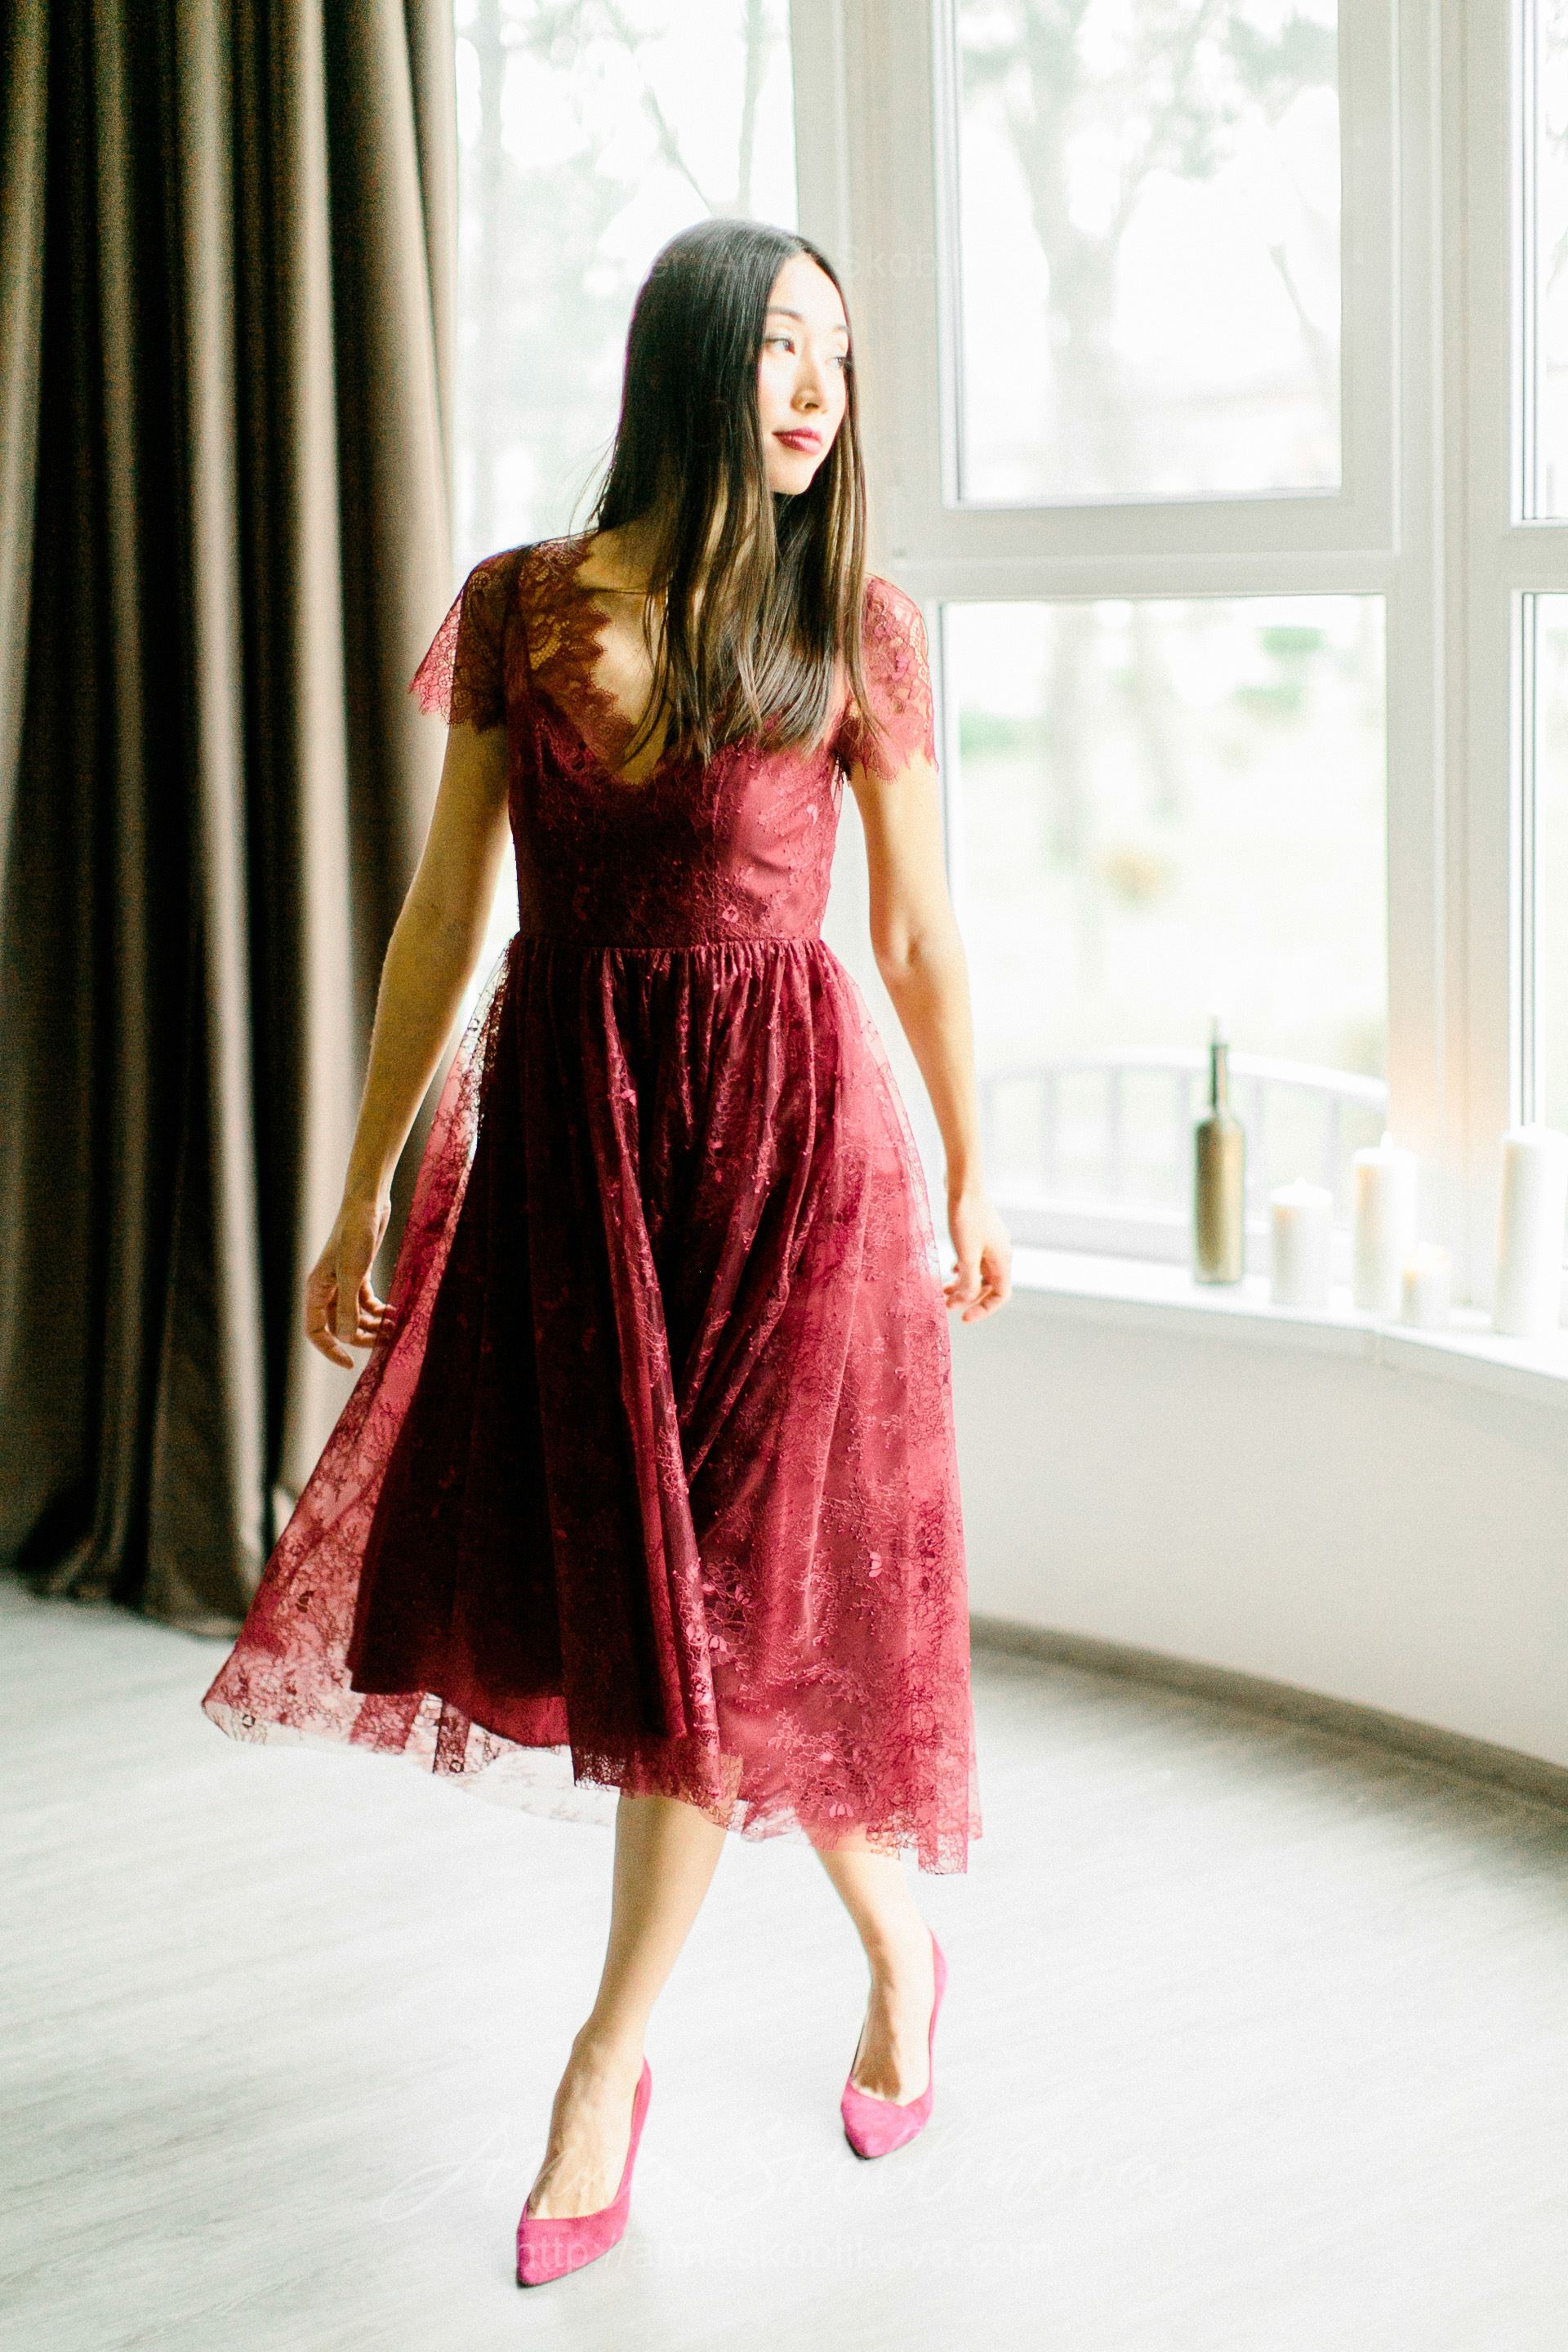 Wine red wedding dress | Wedding & Evening Gowns by Anna